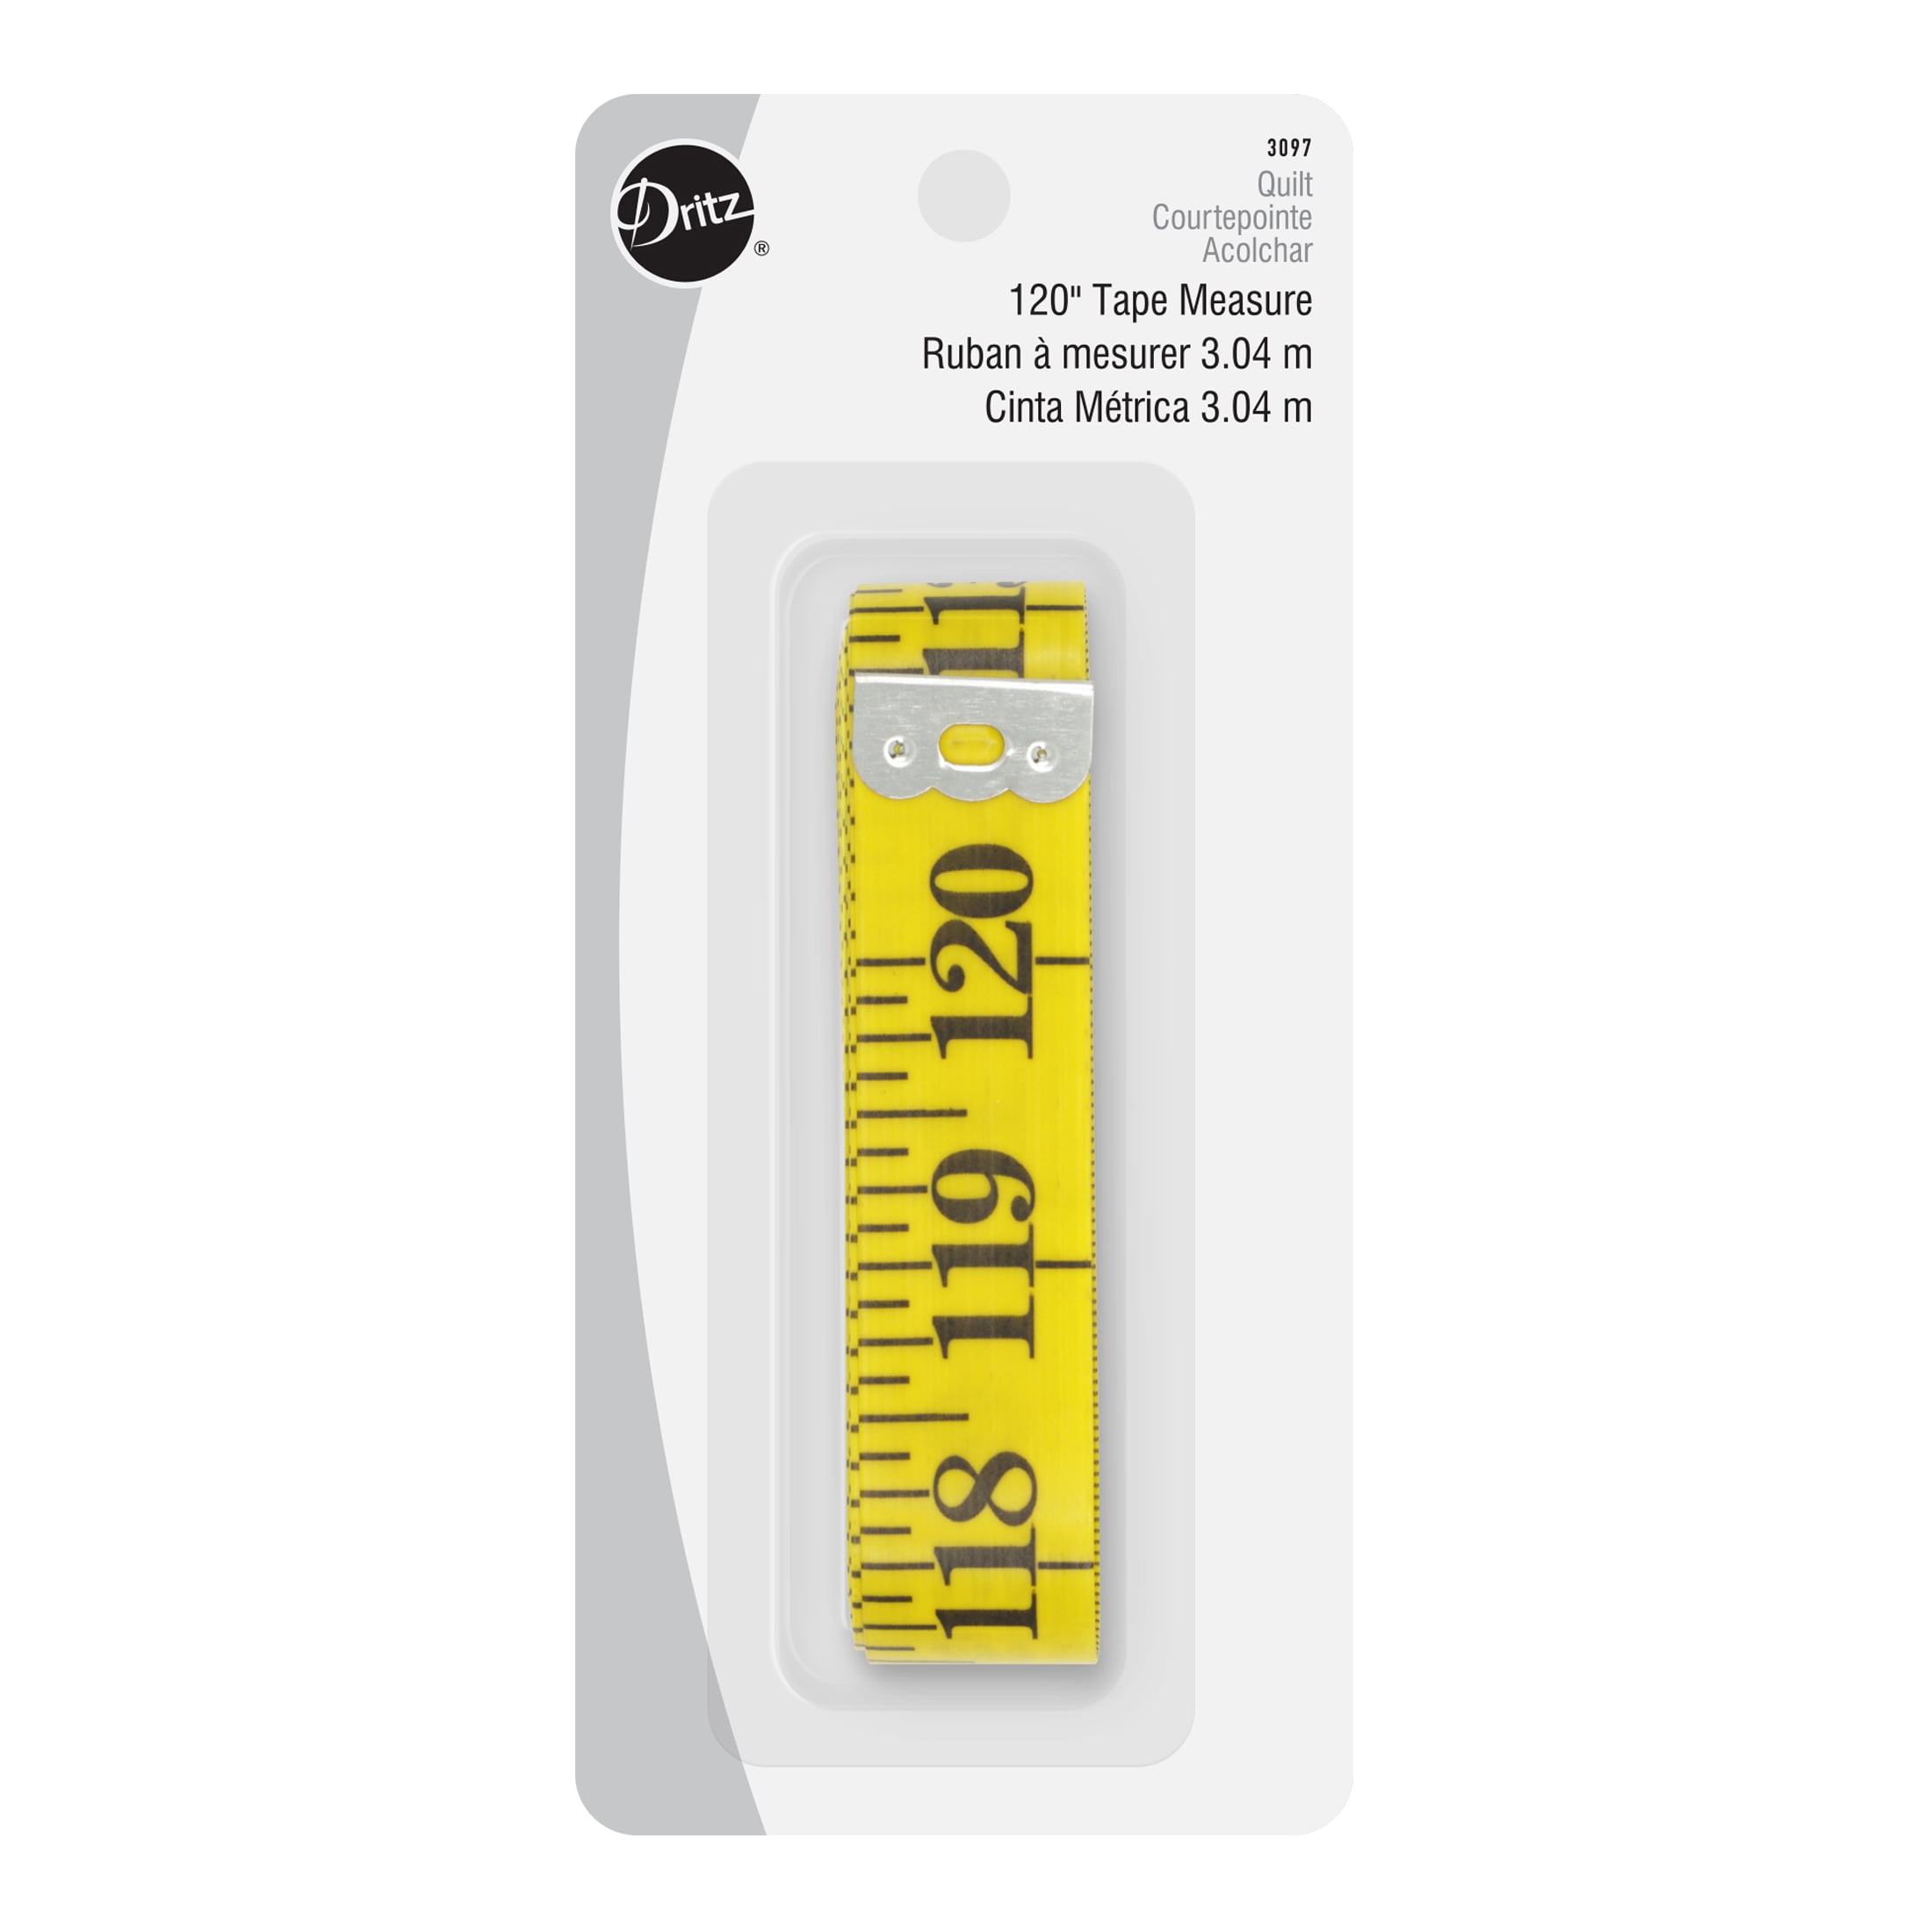 Dritz 120" Tape Measure